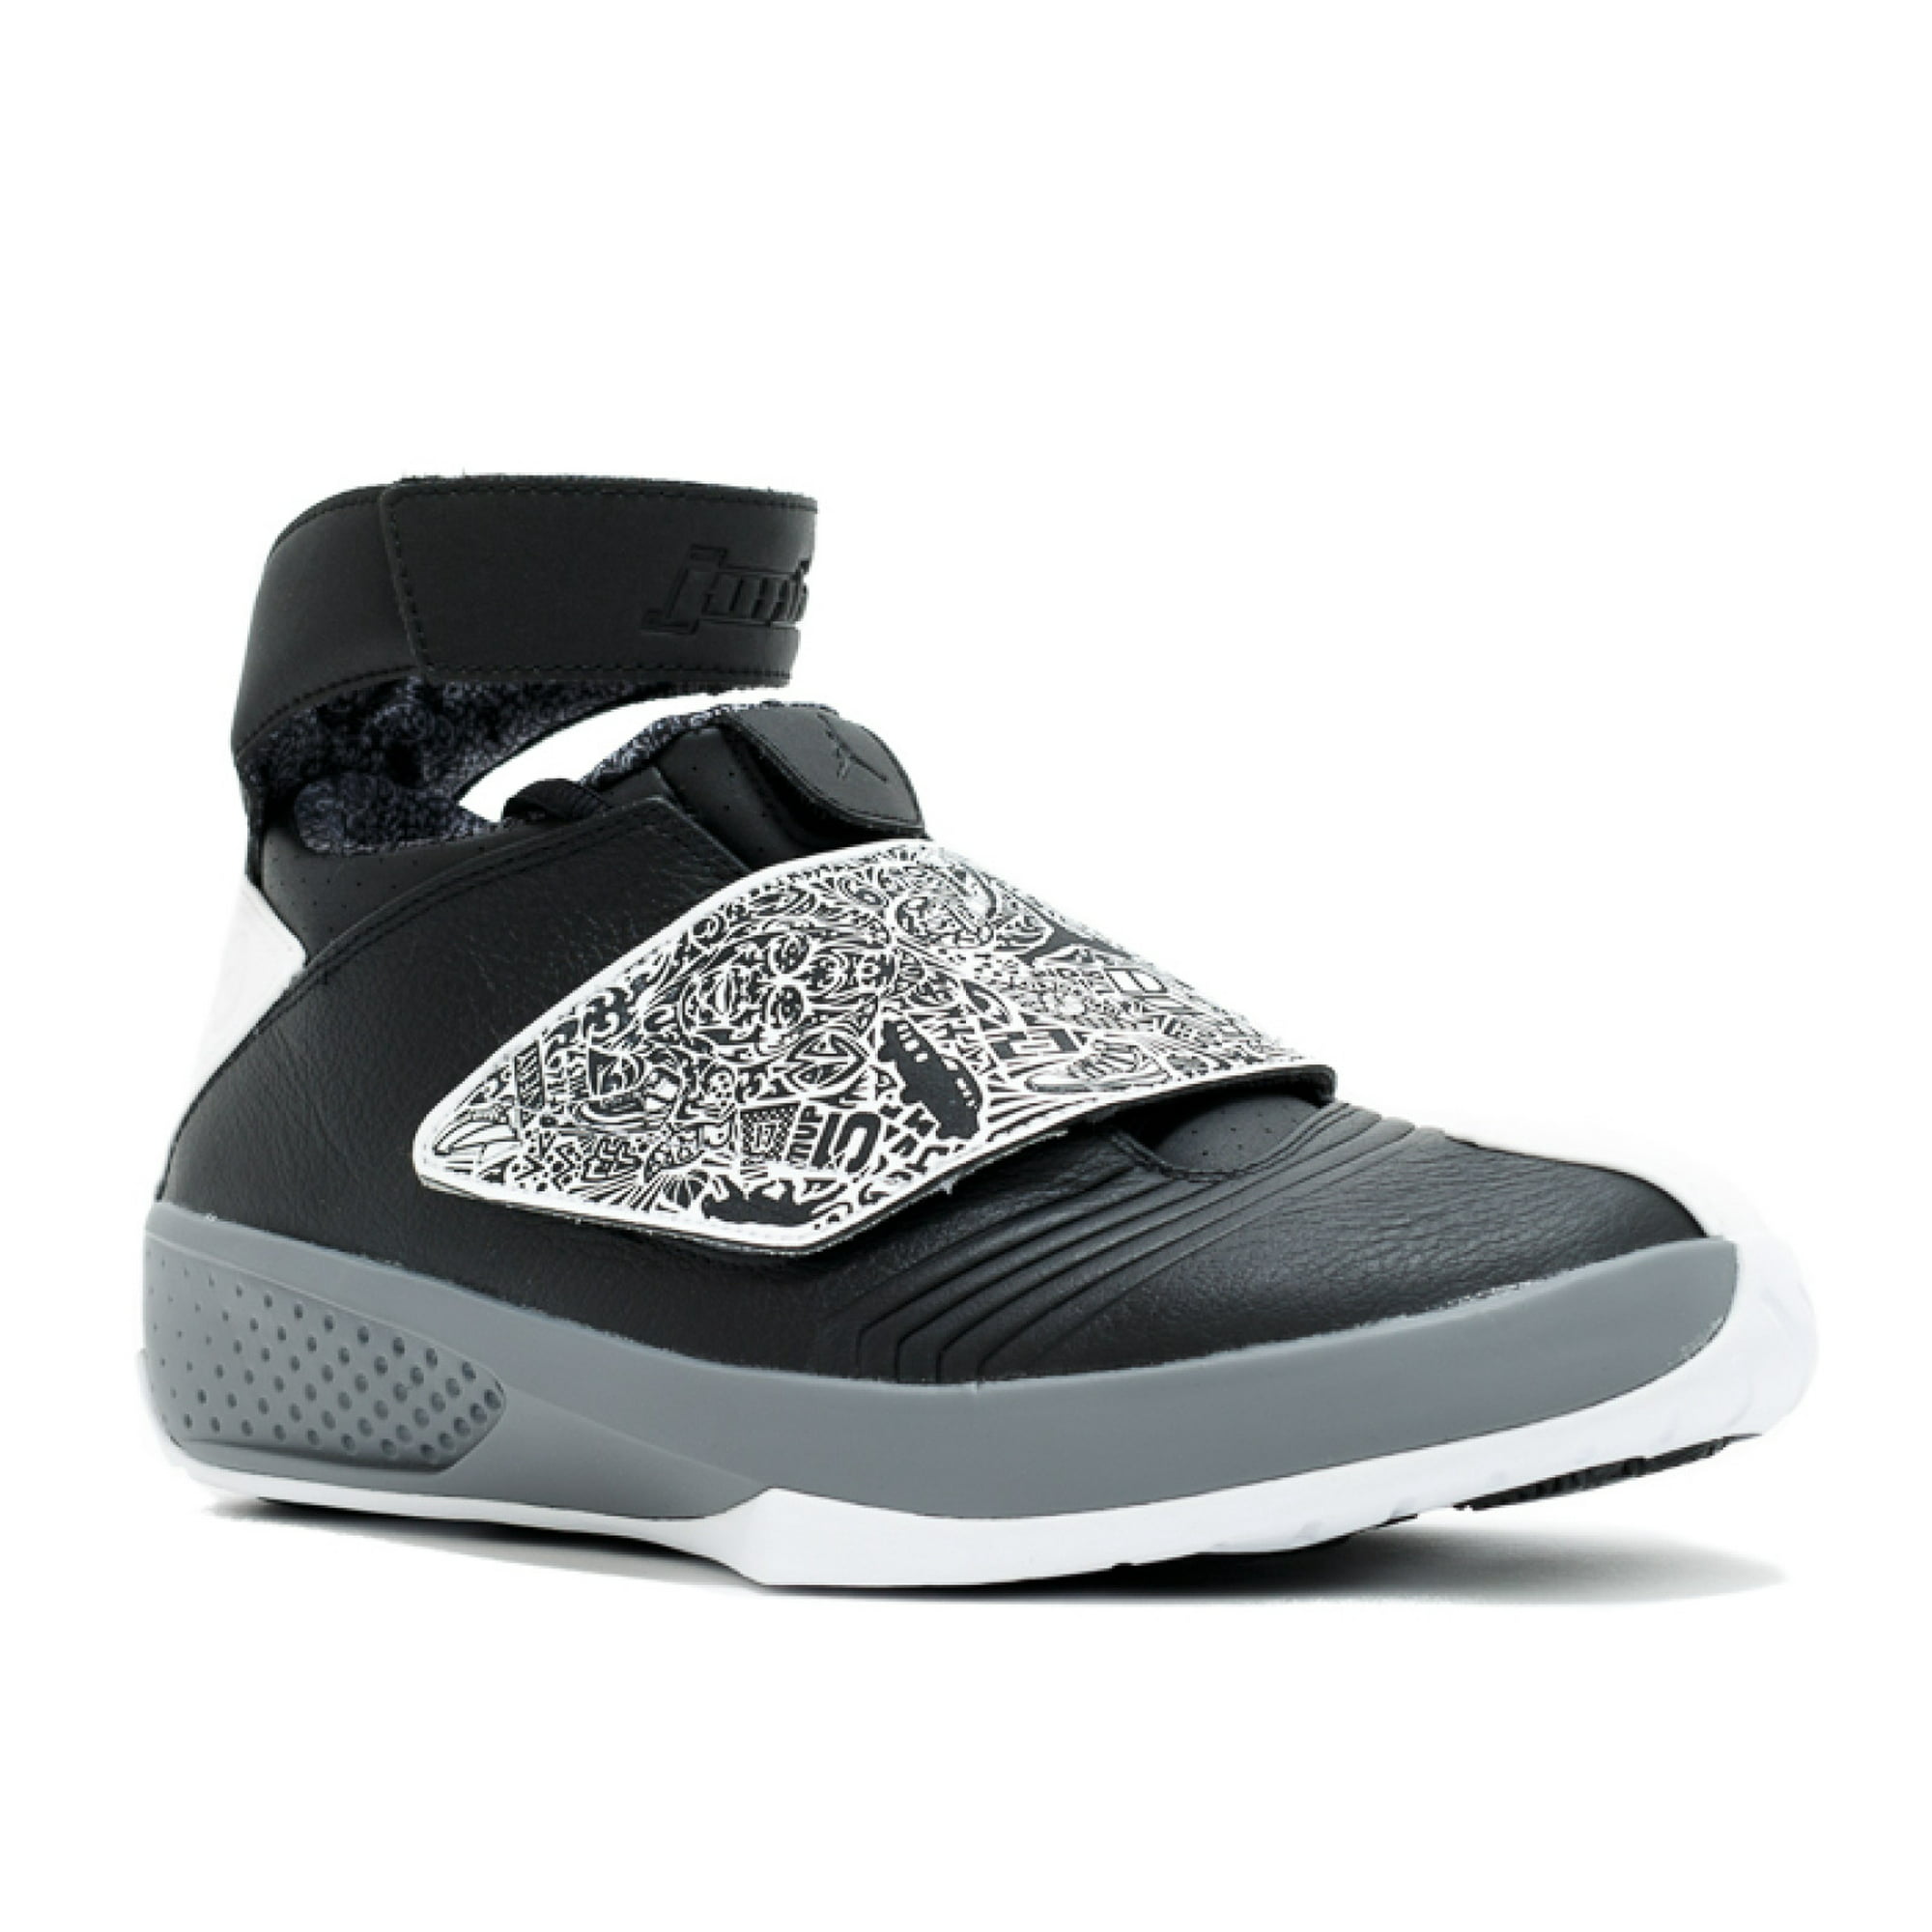 Opcional Clavijas palma Air Jordan - Men - Air Jordan 20 'Playoff' - 310455-003 - Size 14 | Walmart  Canada